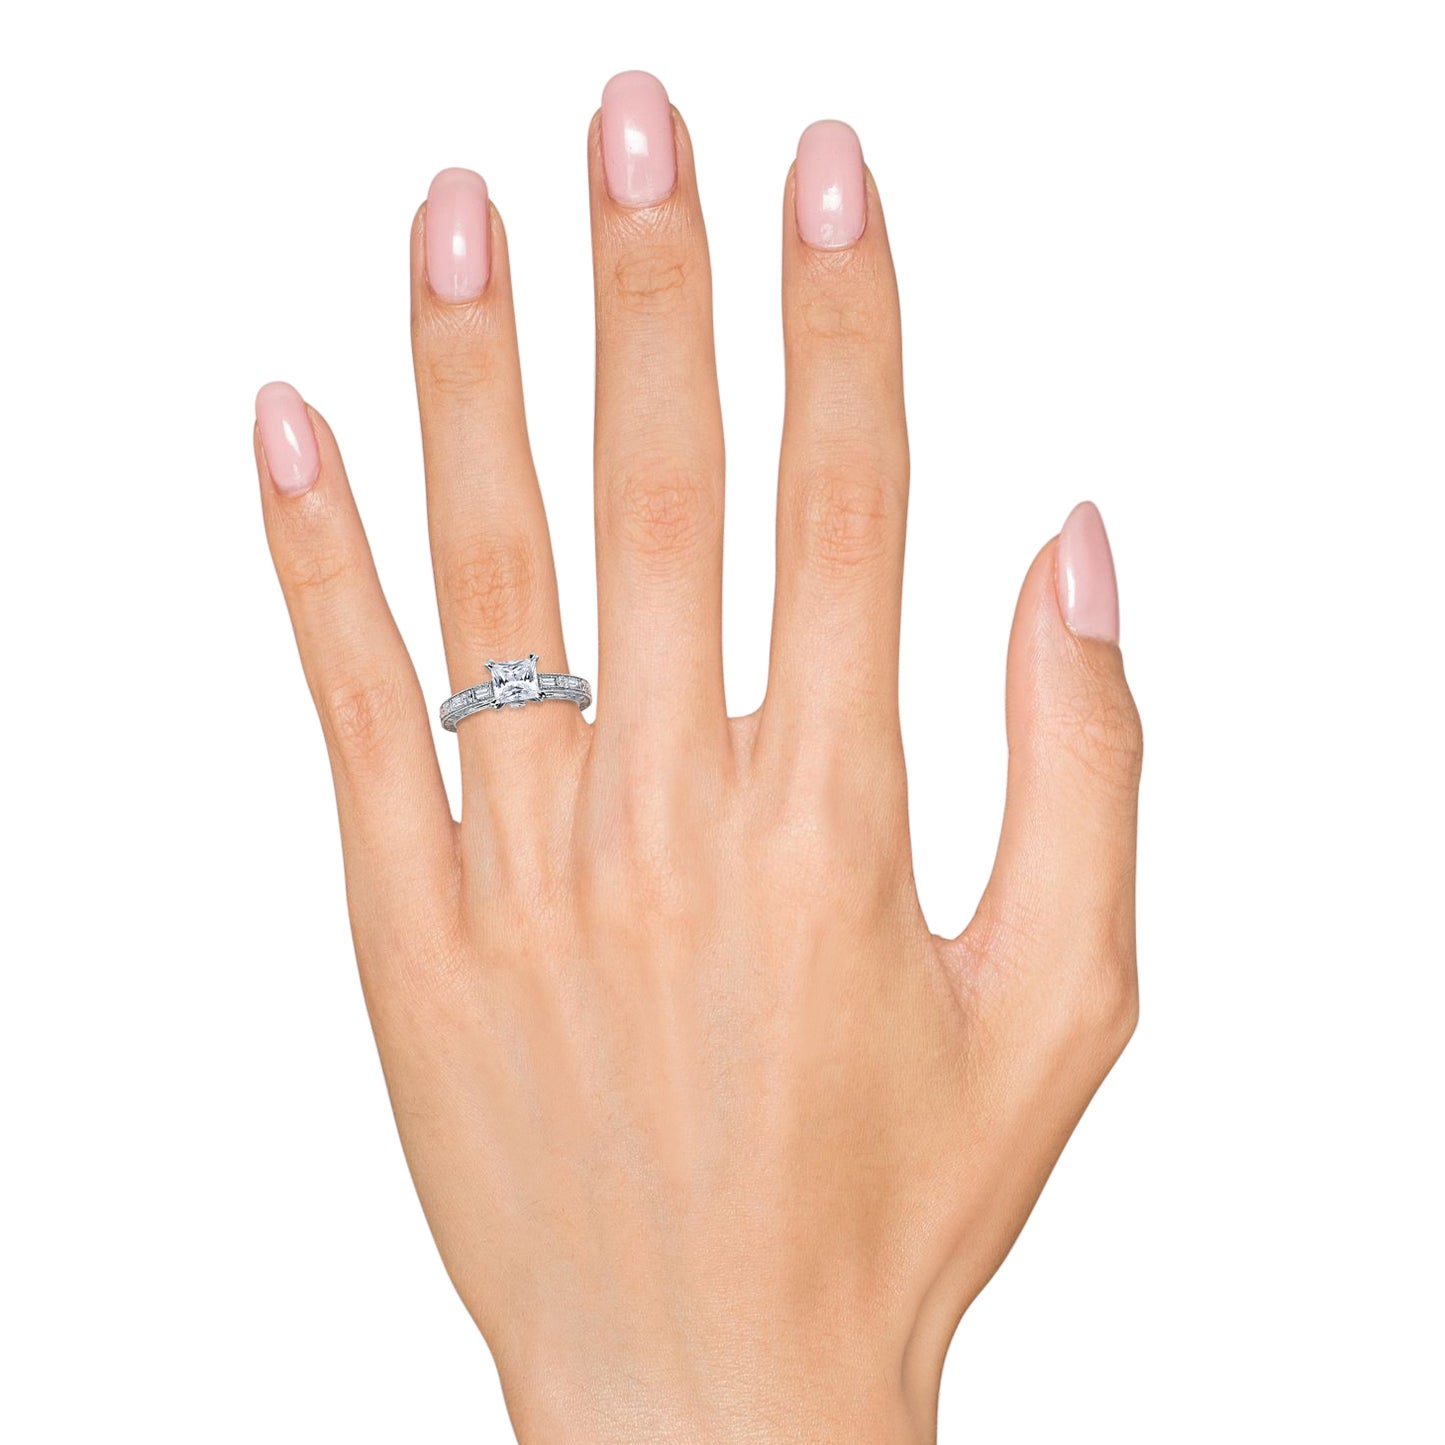 Deco Engraved Baguette Diamond Engagement Ring